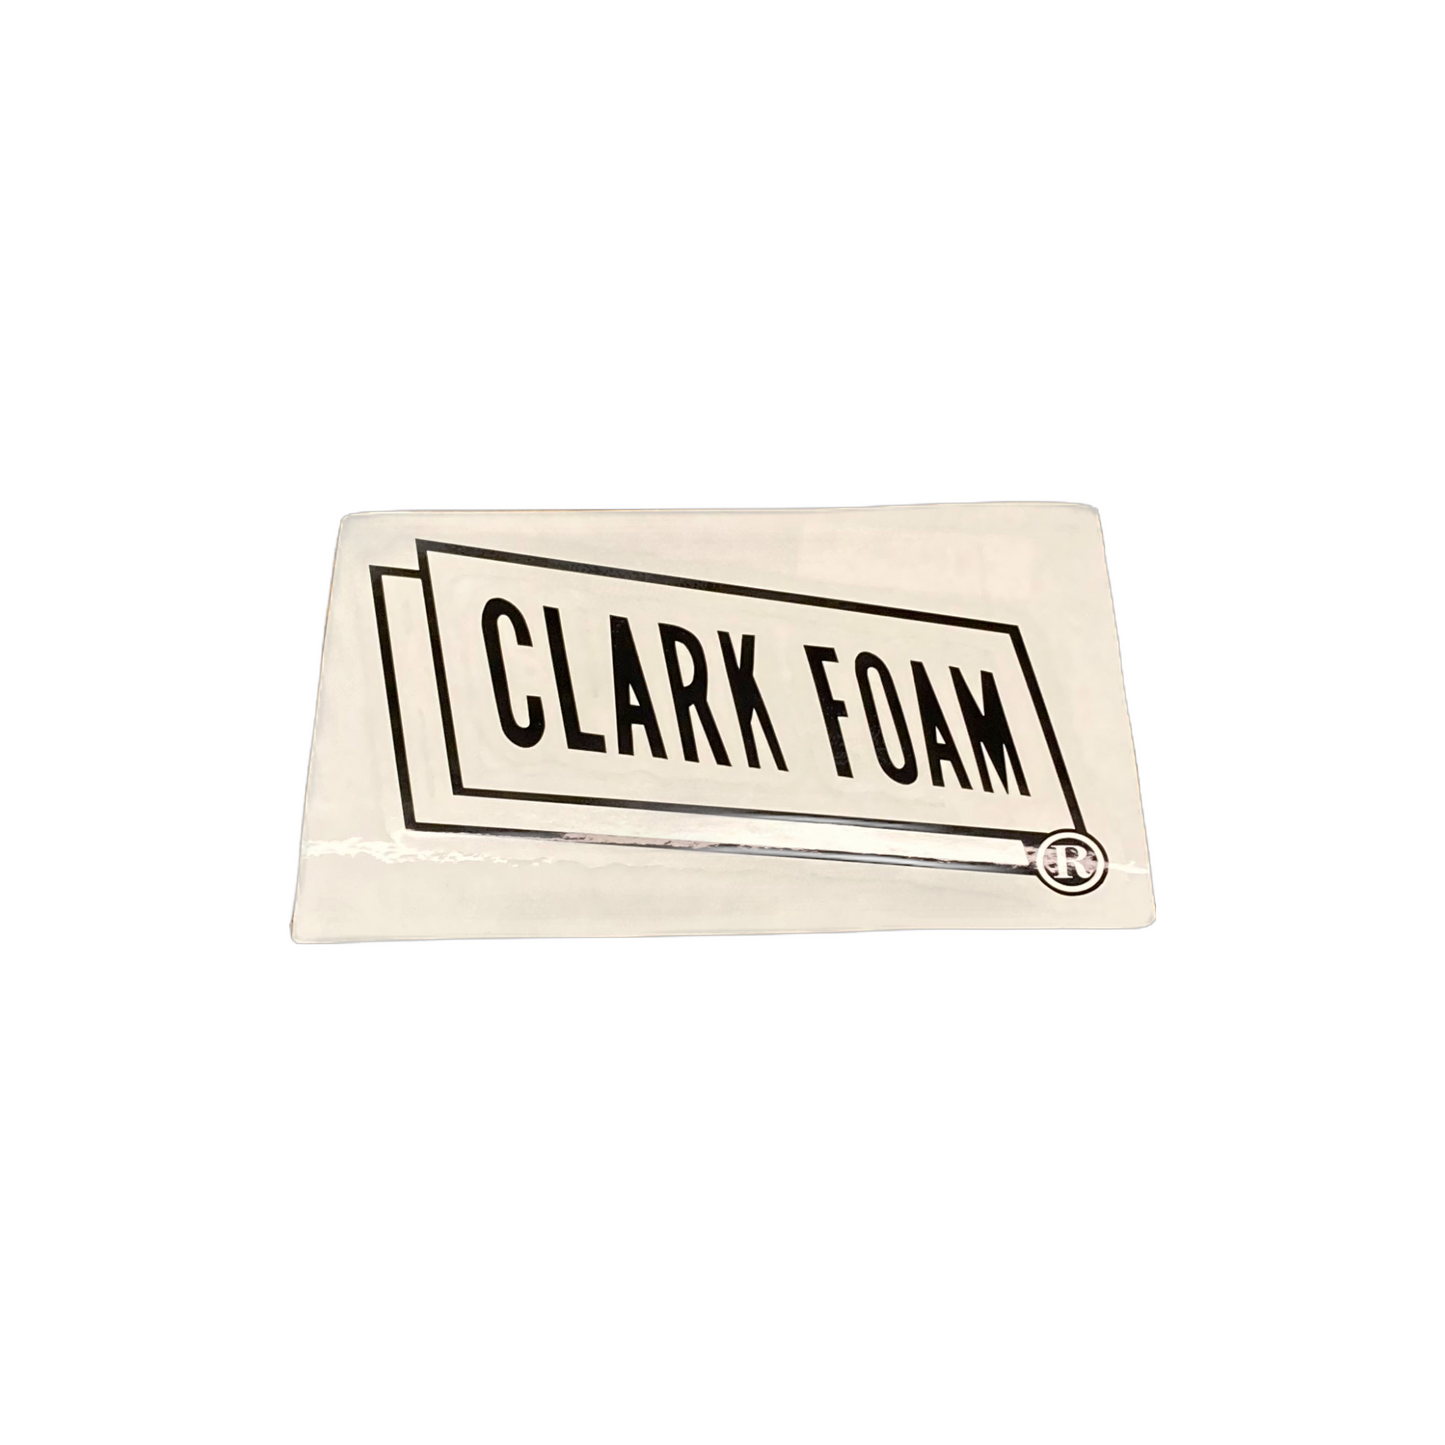 CLARK FOAM CUTTING SHEET